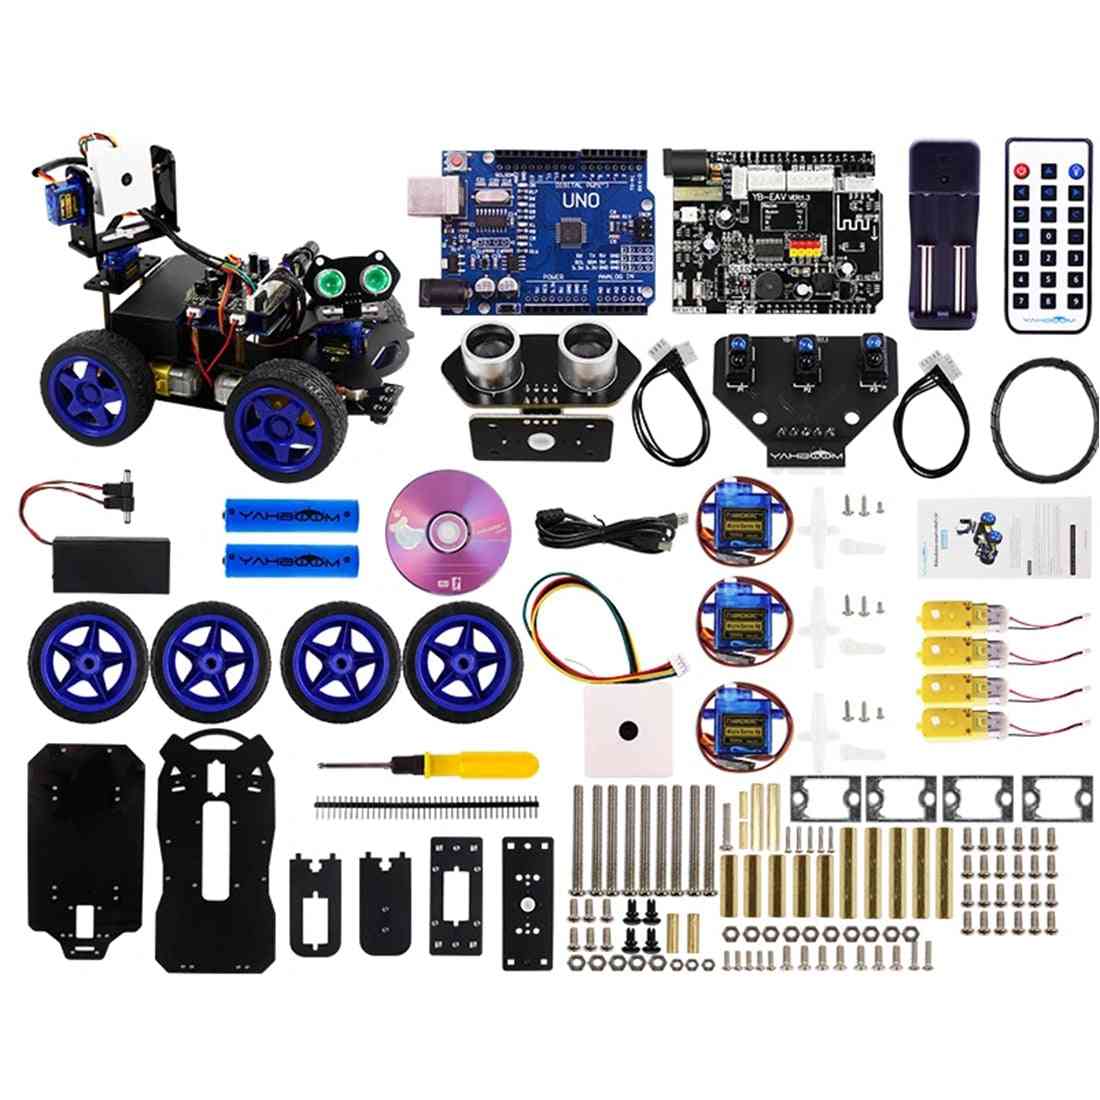 Lumineszierendes Ultraschallmodul, intelligentes Roboterauto, WLAN-Kamera, Gimbal-Kit für Arduino